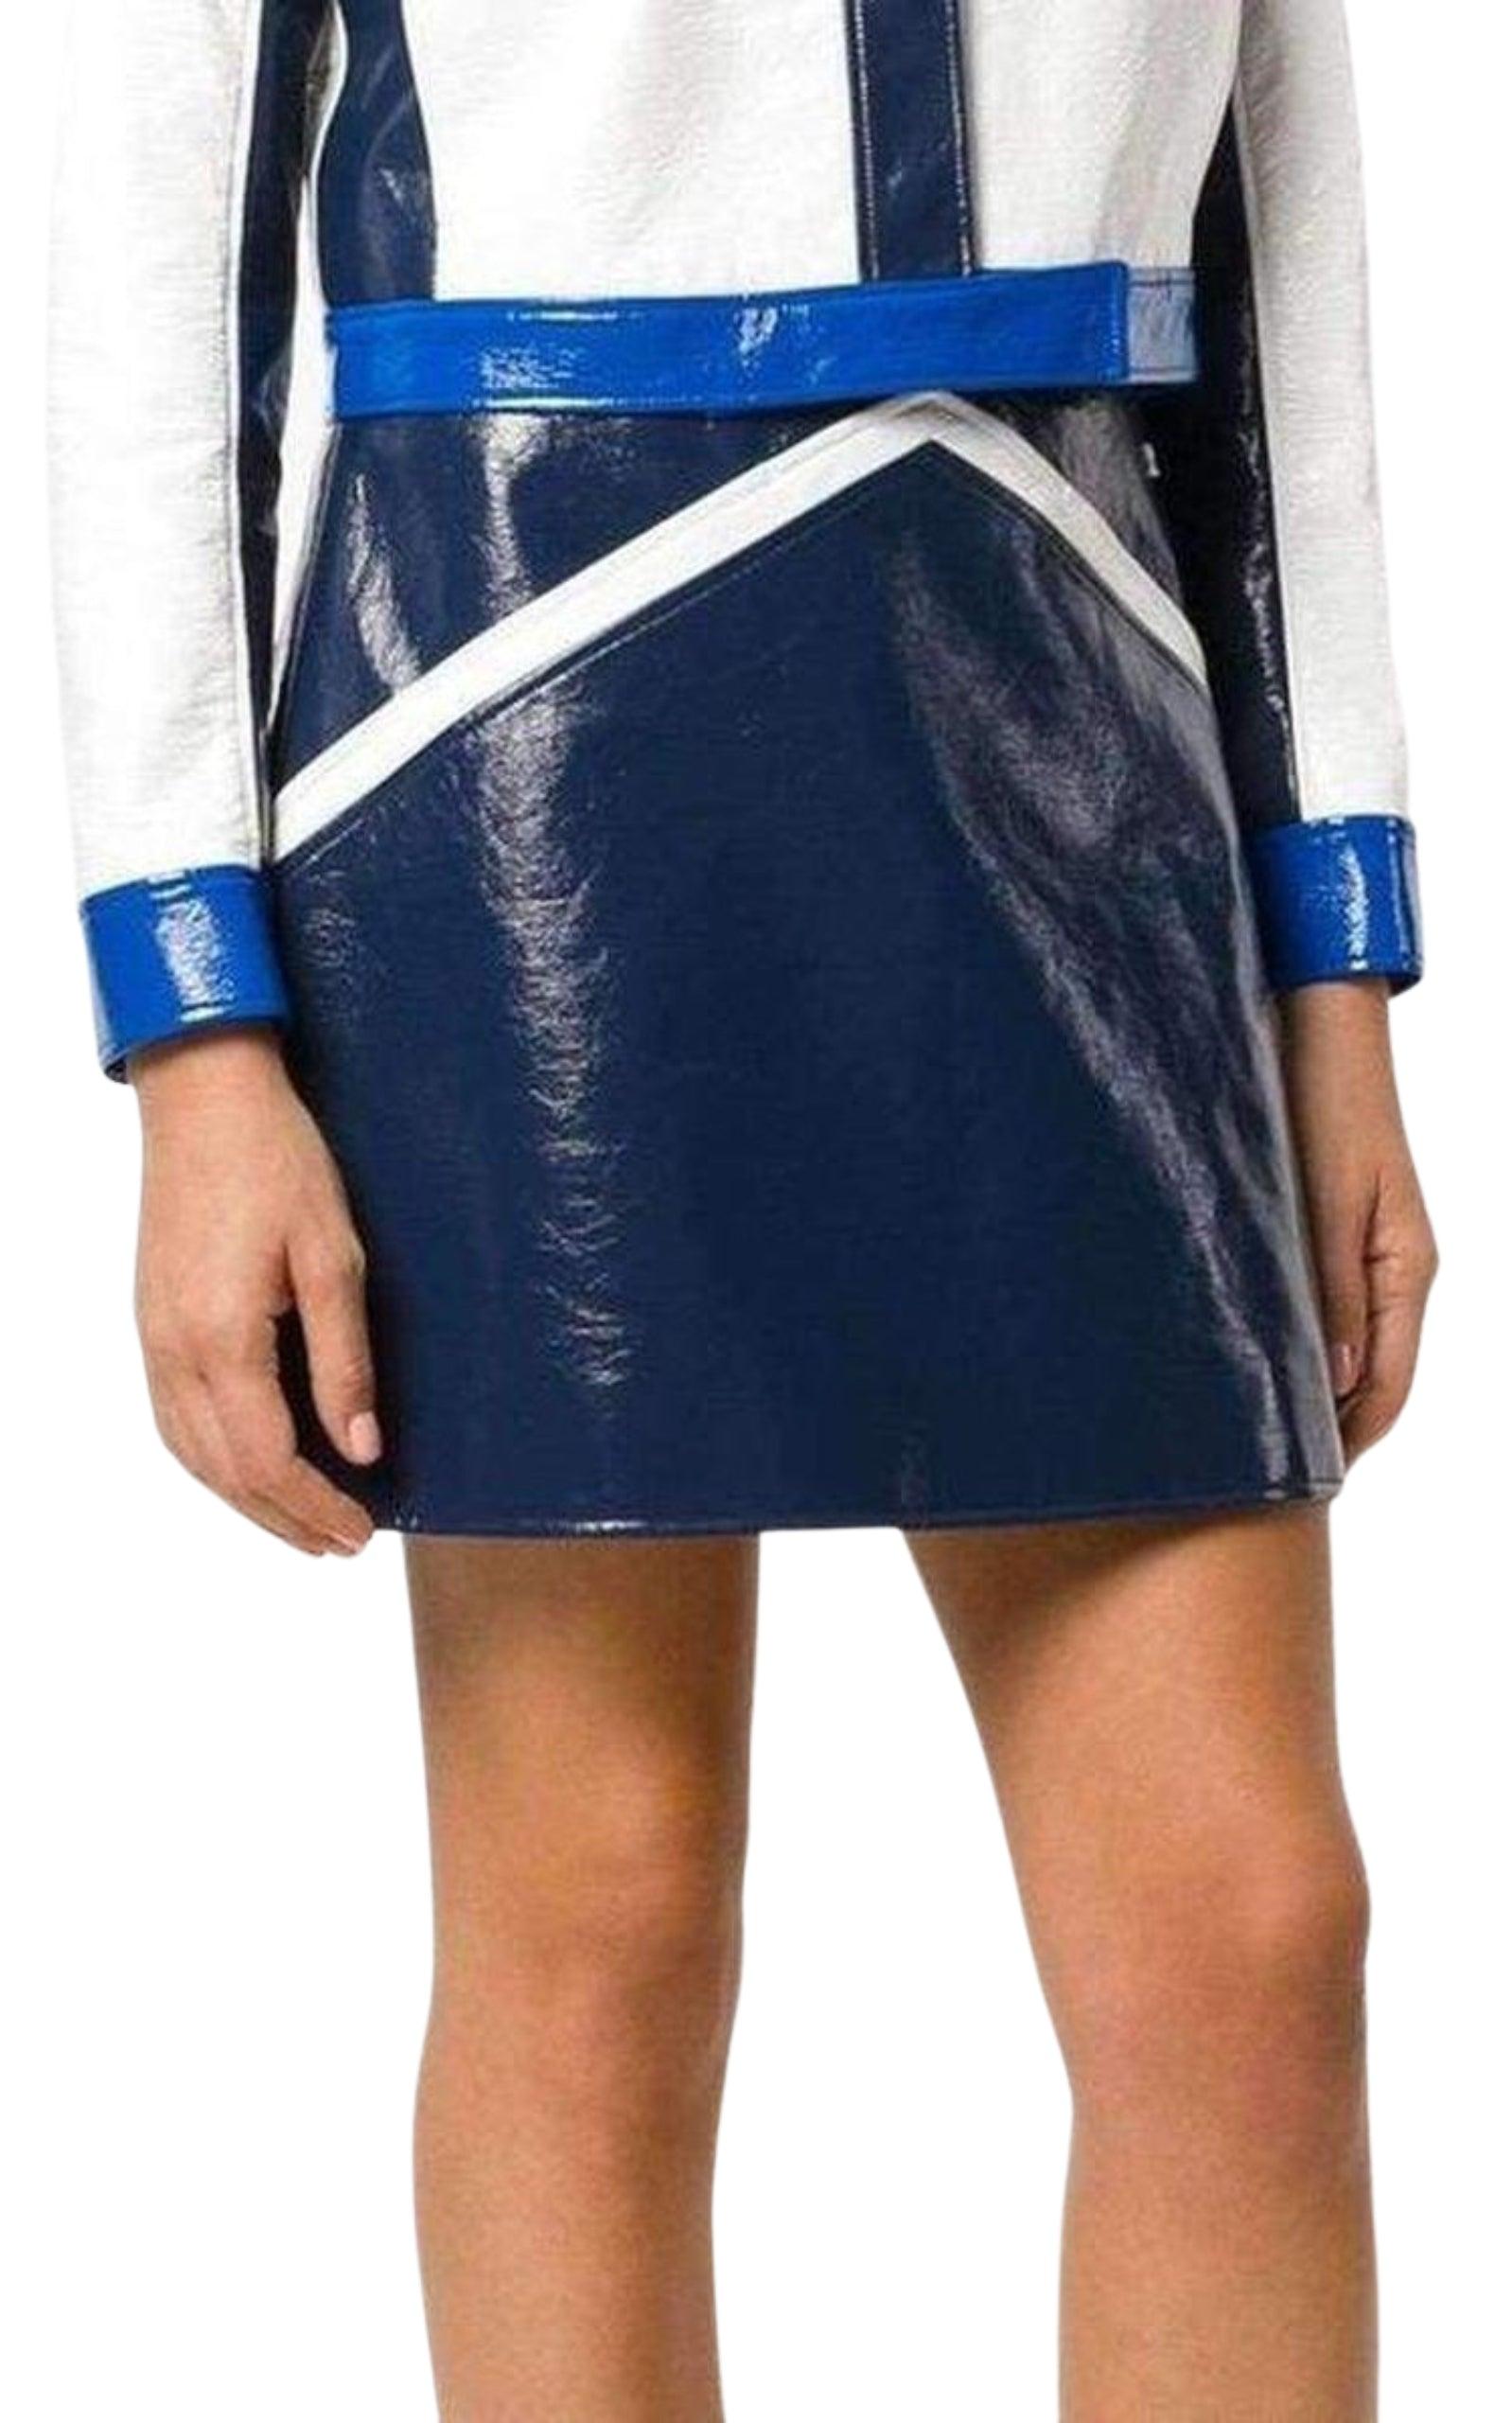 Women's Rangers Dress - Blue